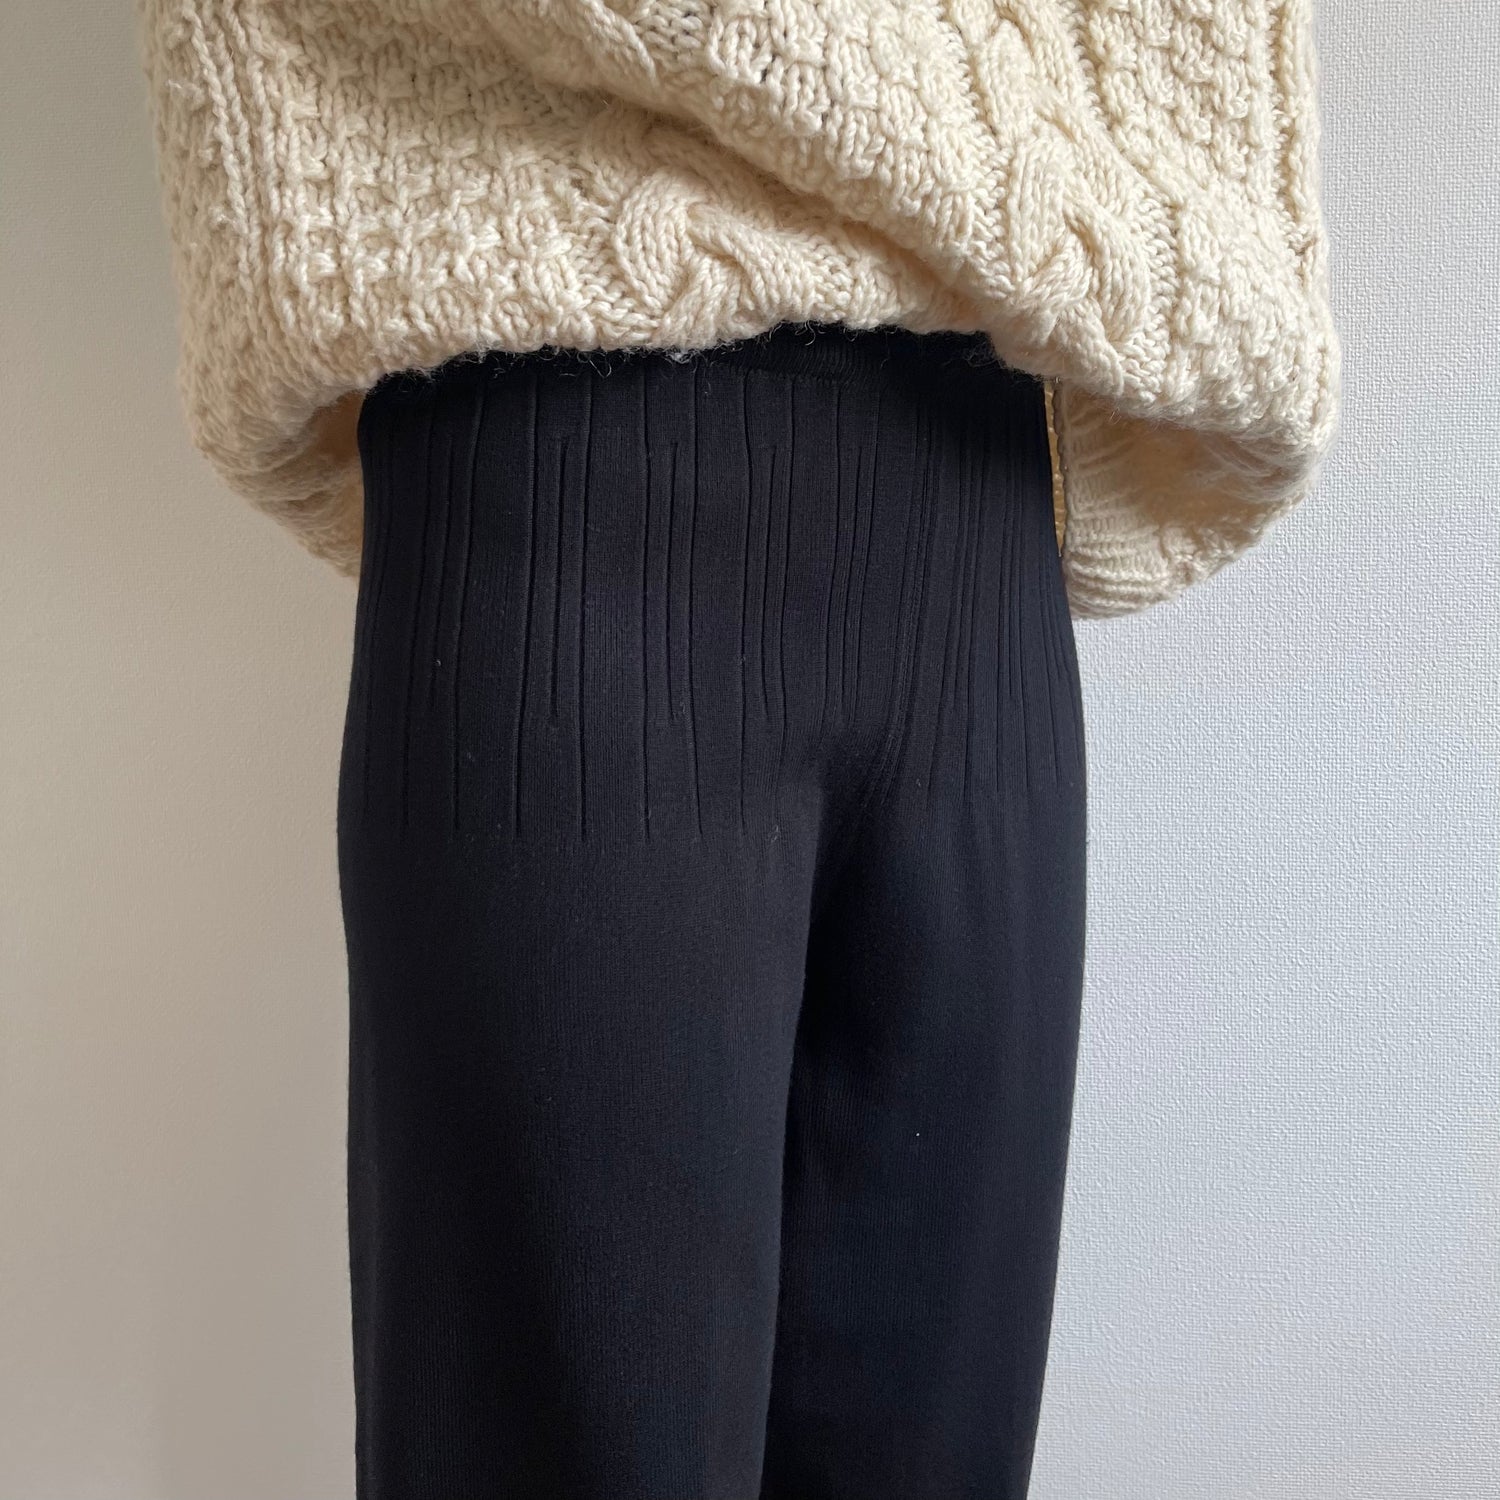 relax knit pants / black